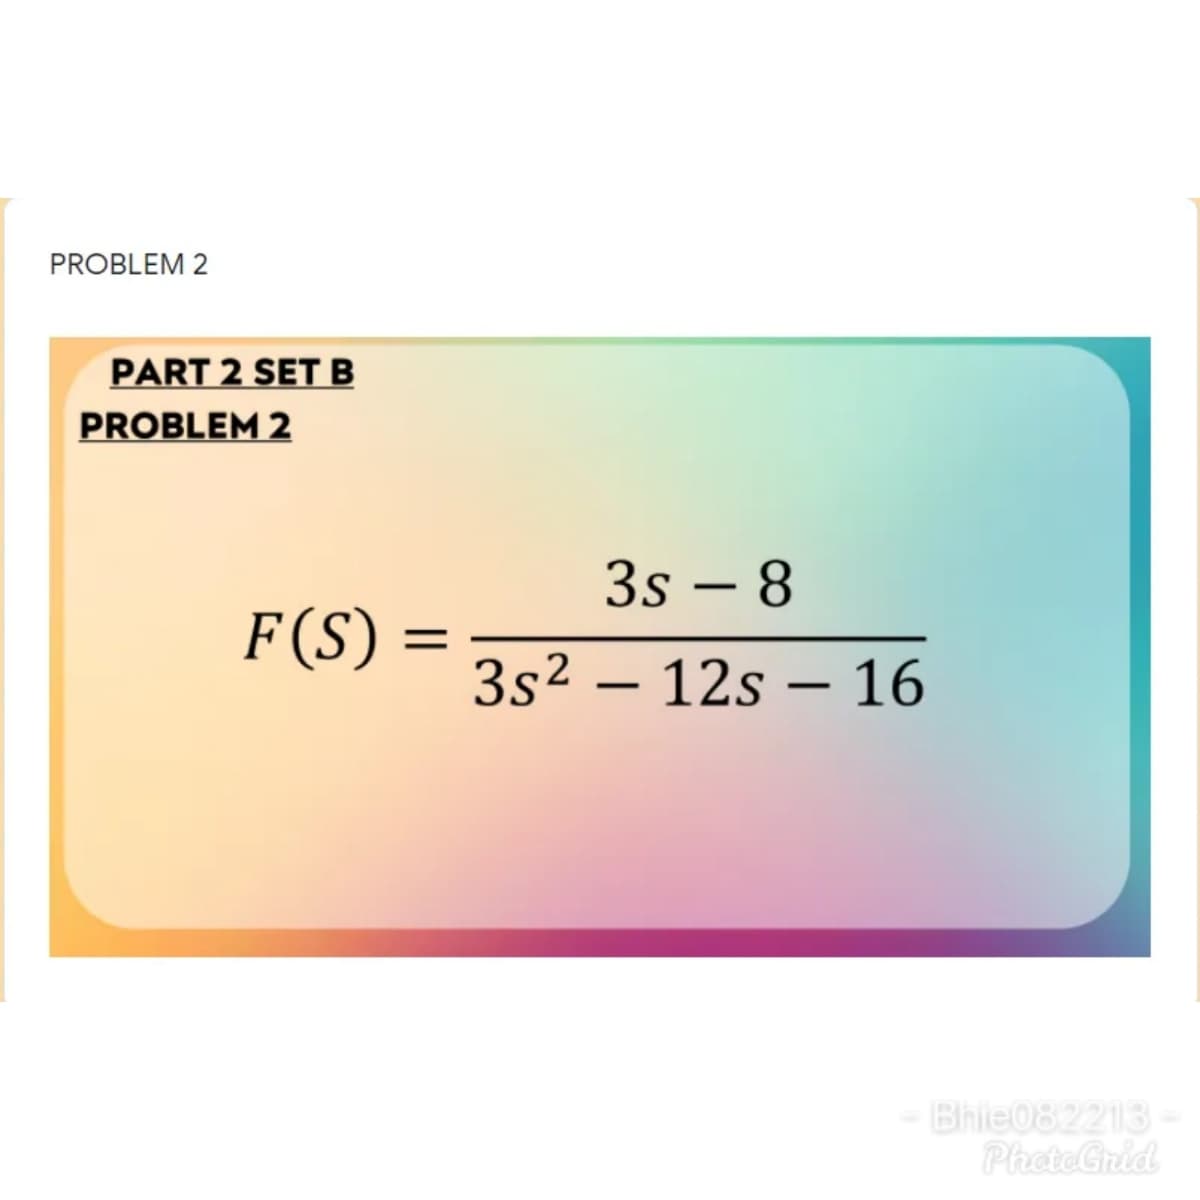 PROBLEM 2
PART 2 SET B
PROBLEM 2
3s – 8
-
F(S)
3s2 – 12s – 16
-
Bhie082213 -
PheteGrid
